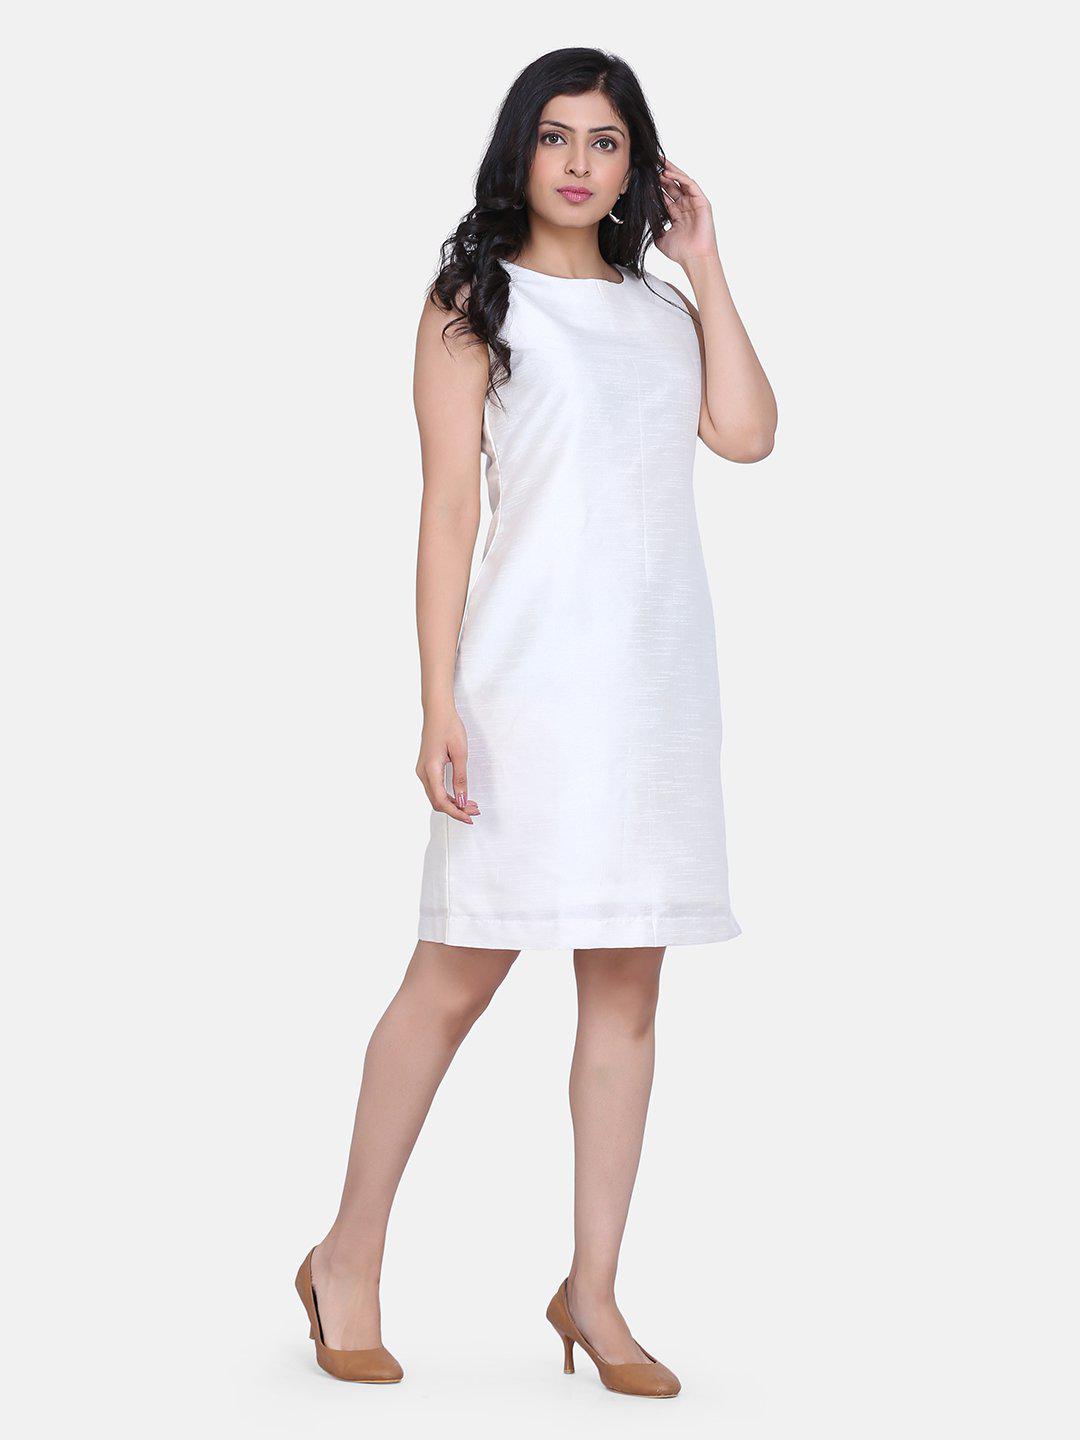 Dupioni Party Sheath Dress - Creamy White